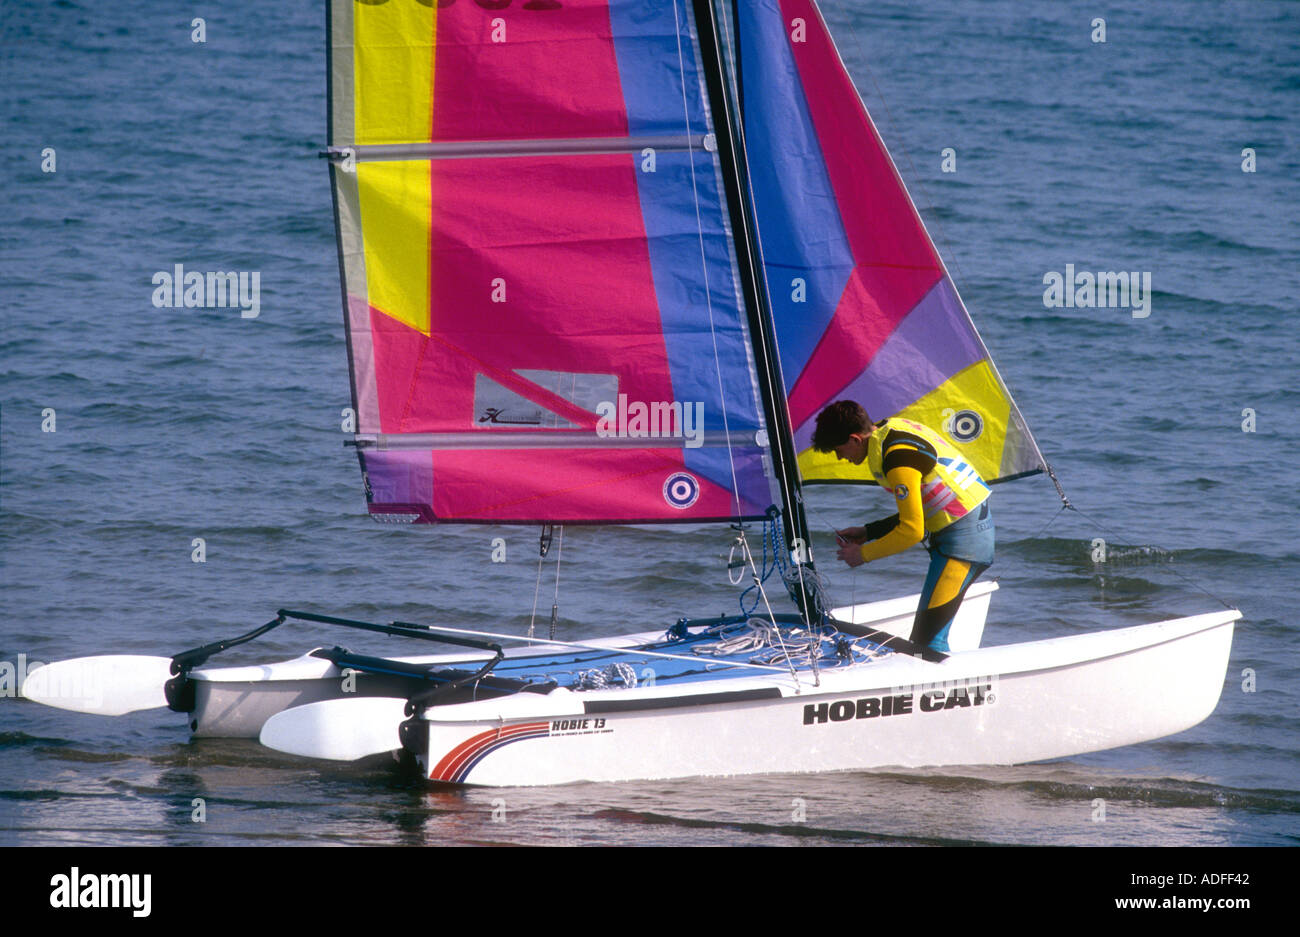 A Hobie Cat Sports Catamaran At Sandsfoot Cove Weymouth Dorset England Uk Stock Photo Alamy